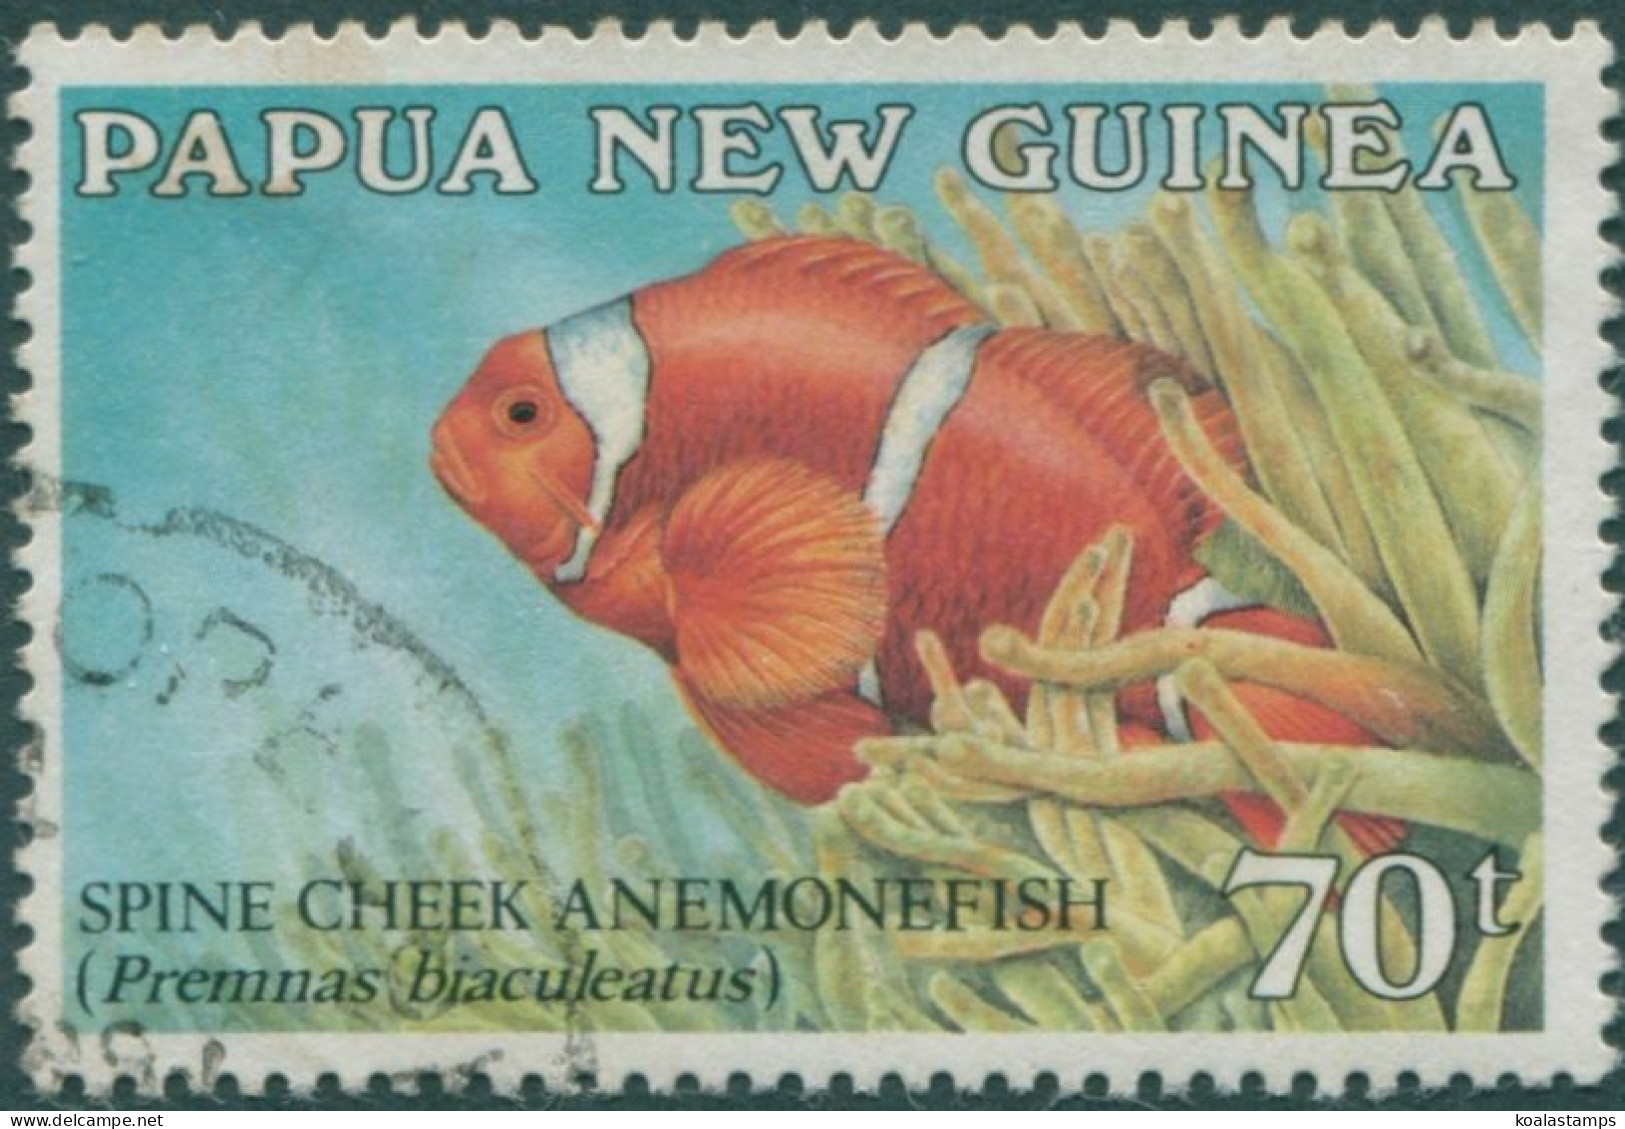 Papua New Guinea 1987 SG542 70t Spine Cheek Anemonefish FU - Papoea-Nieuw-Guinea